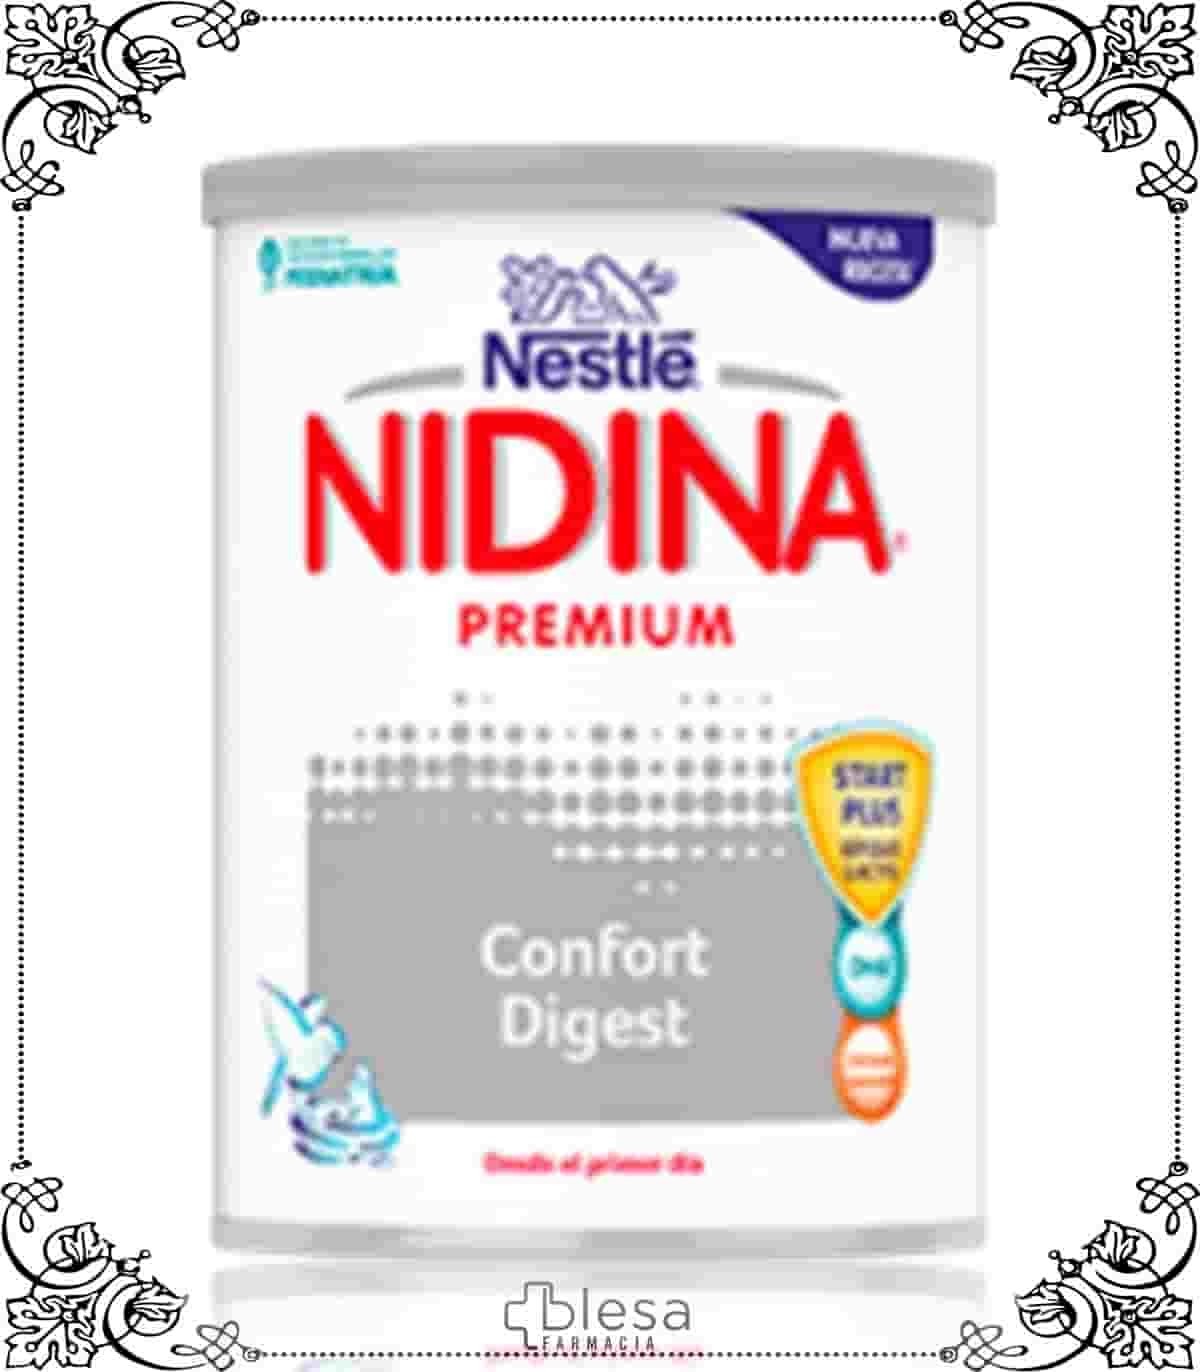 Oferta leche infantil Nidina 1 START con bifidus 800GR. NESTLE - Nappy